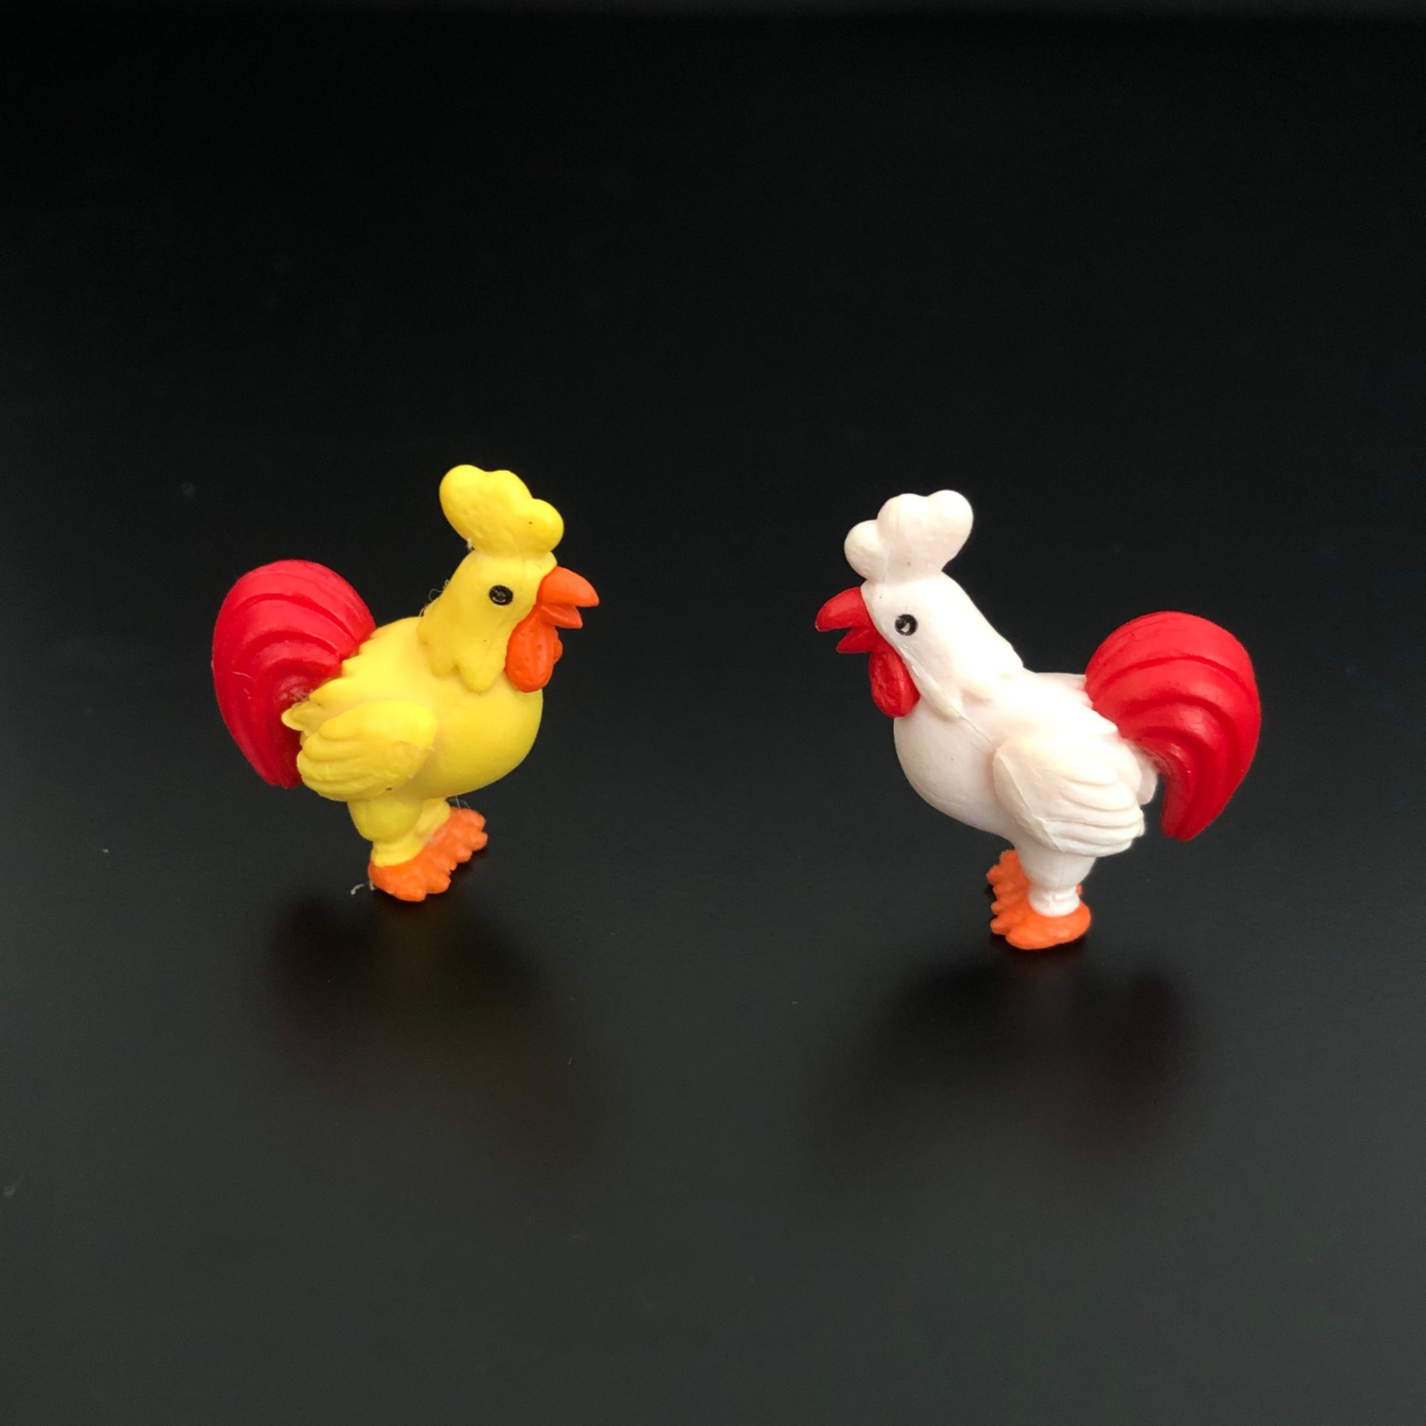 murga, rooster, chicken